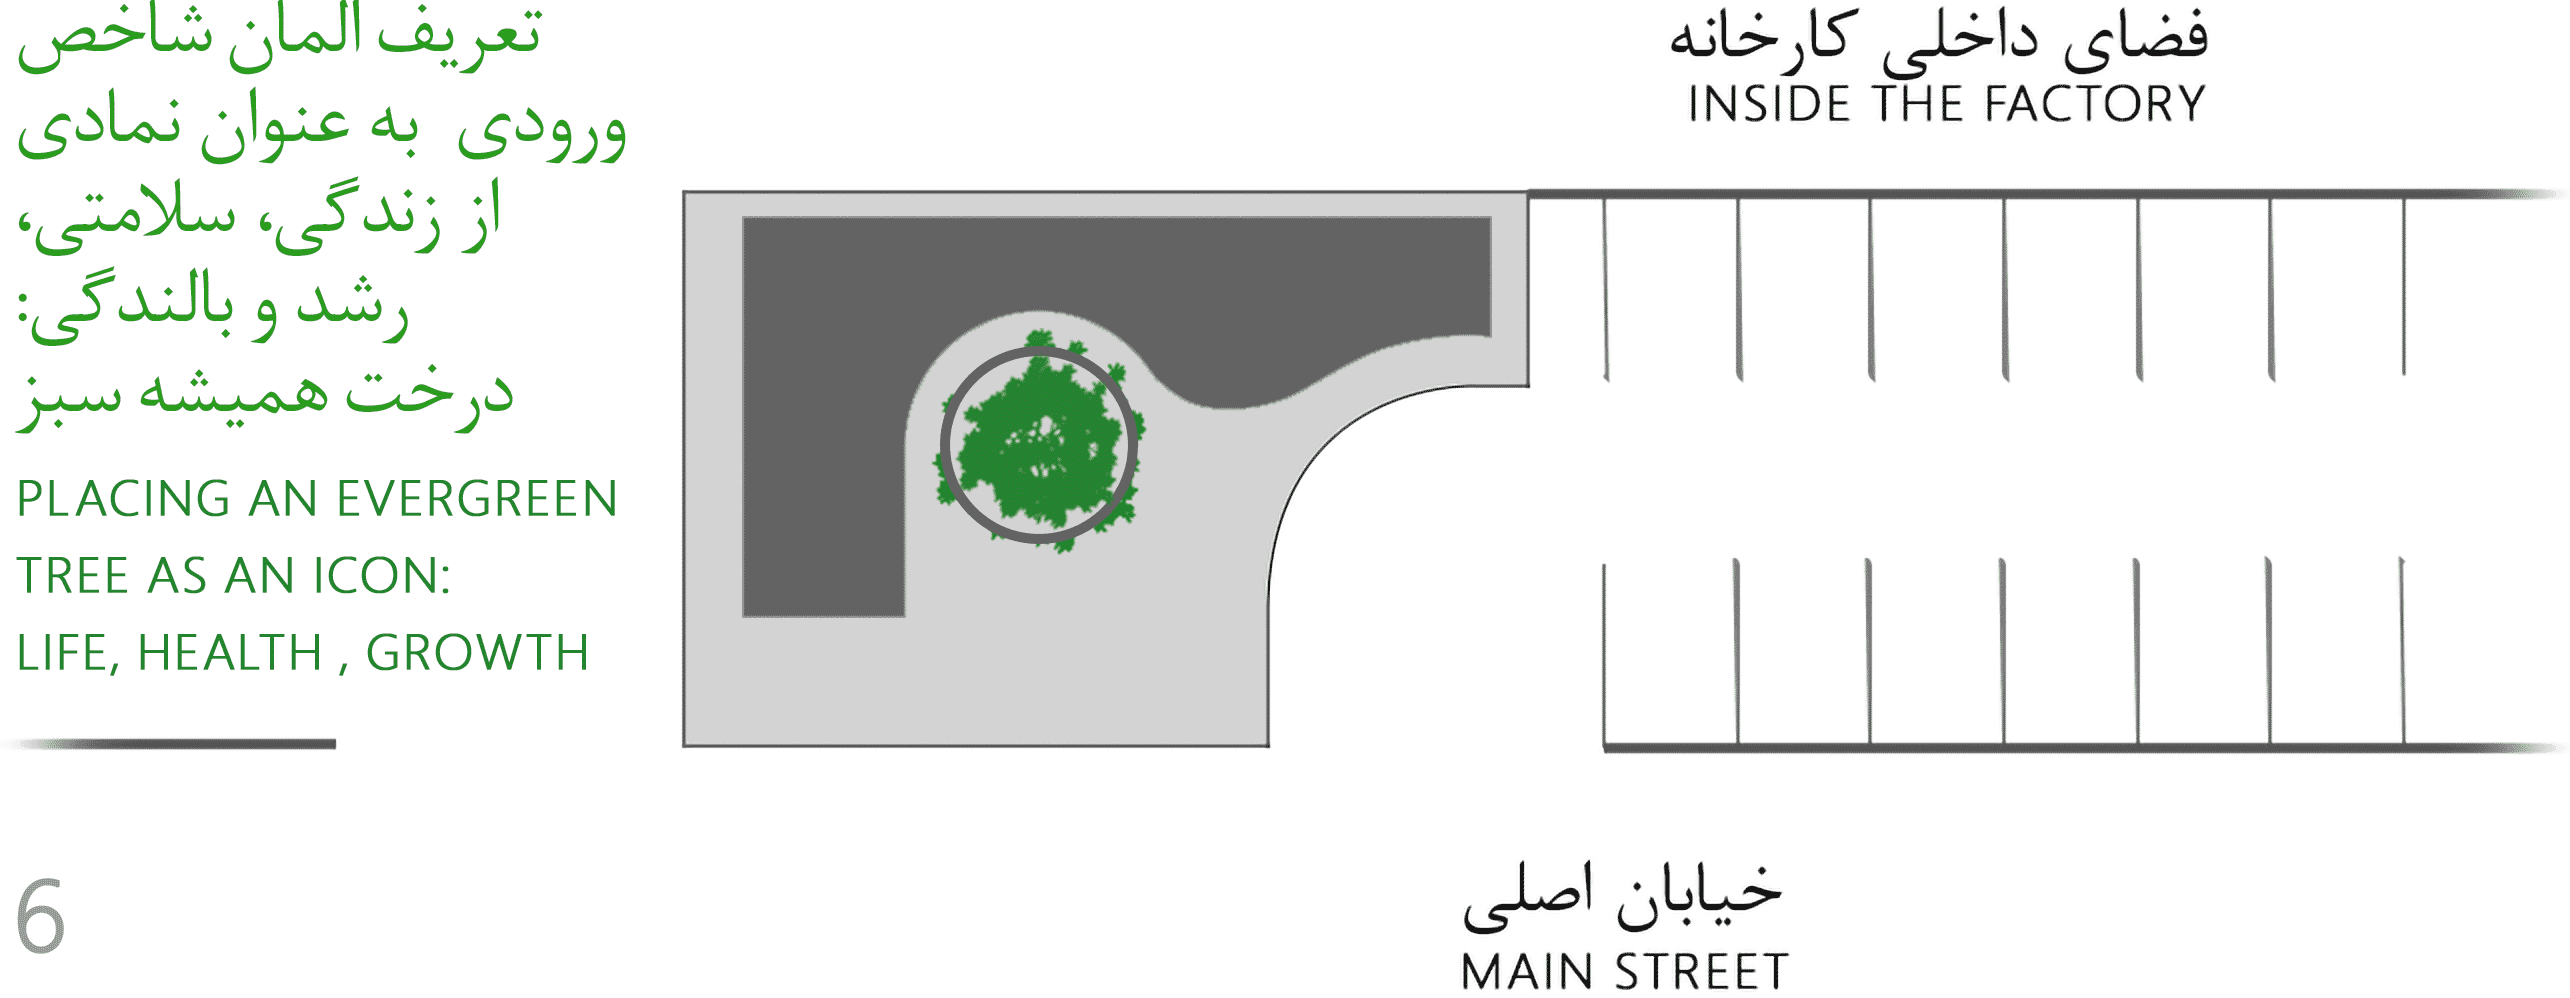 diagram 6, Sobhan Daroo co. entrance gate